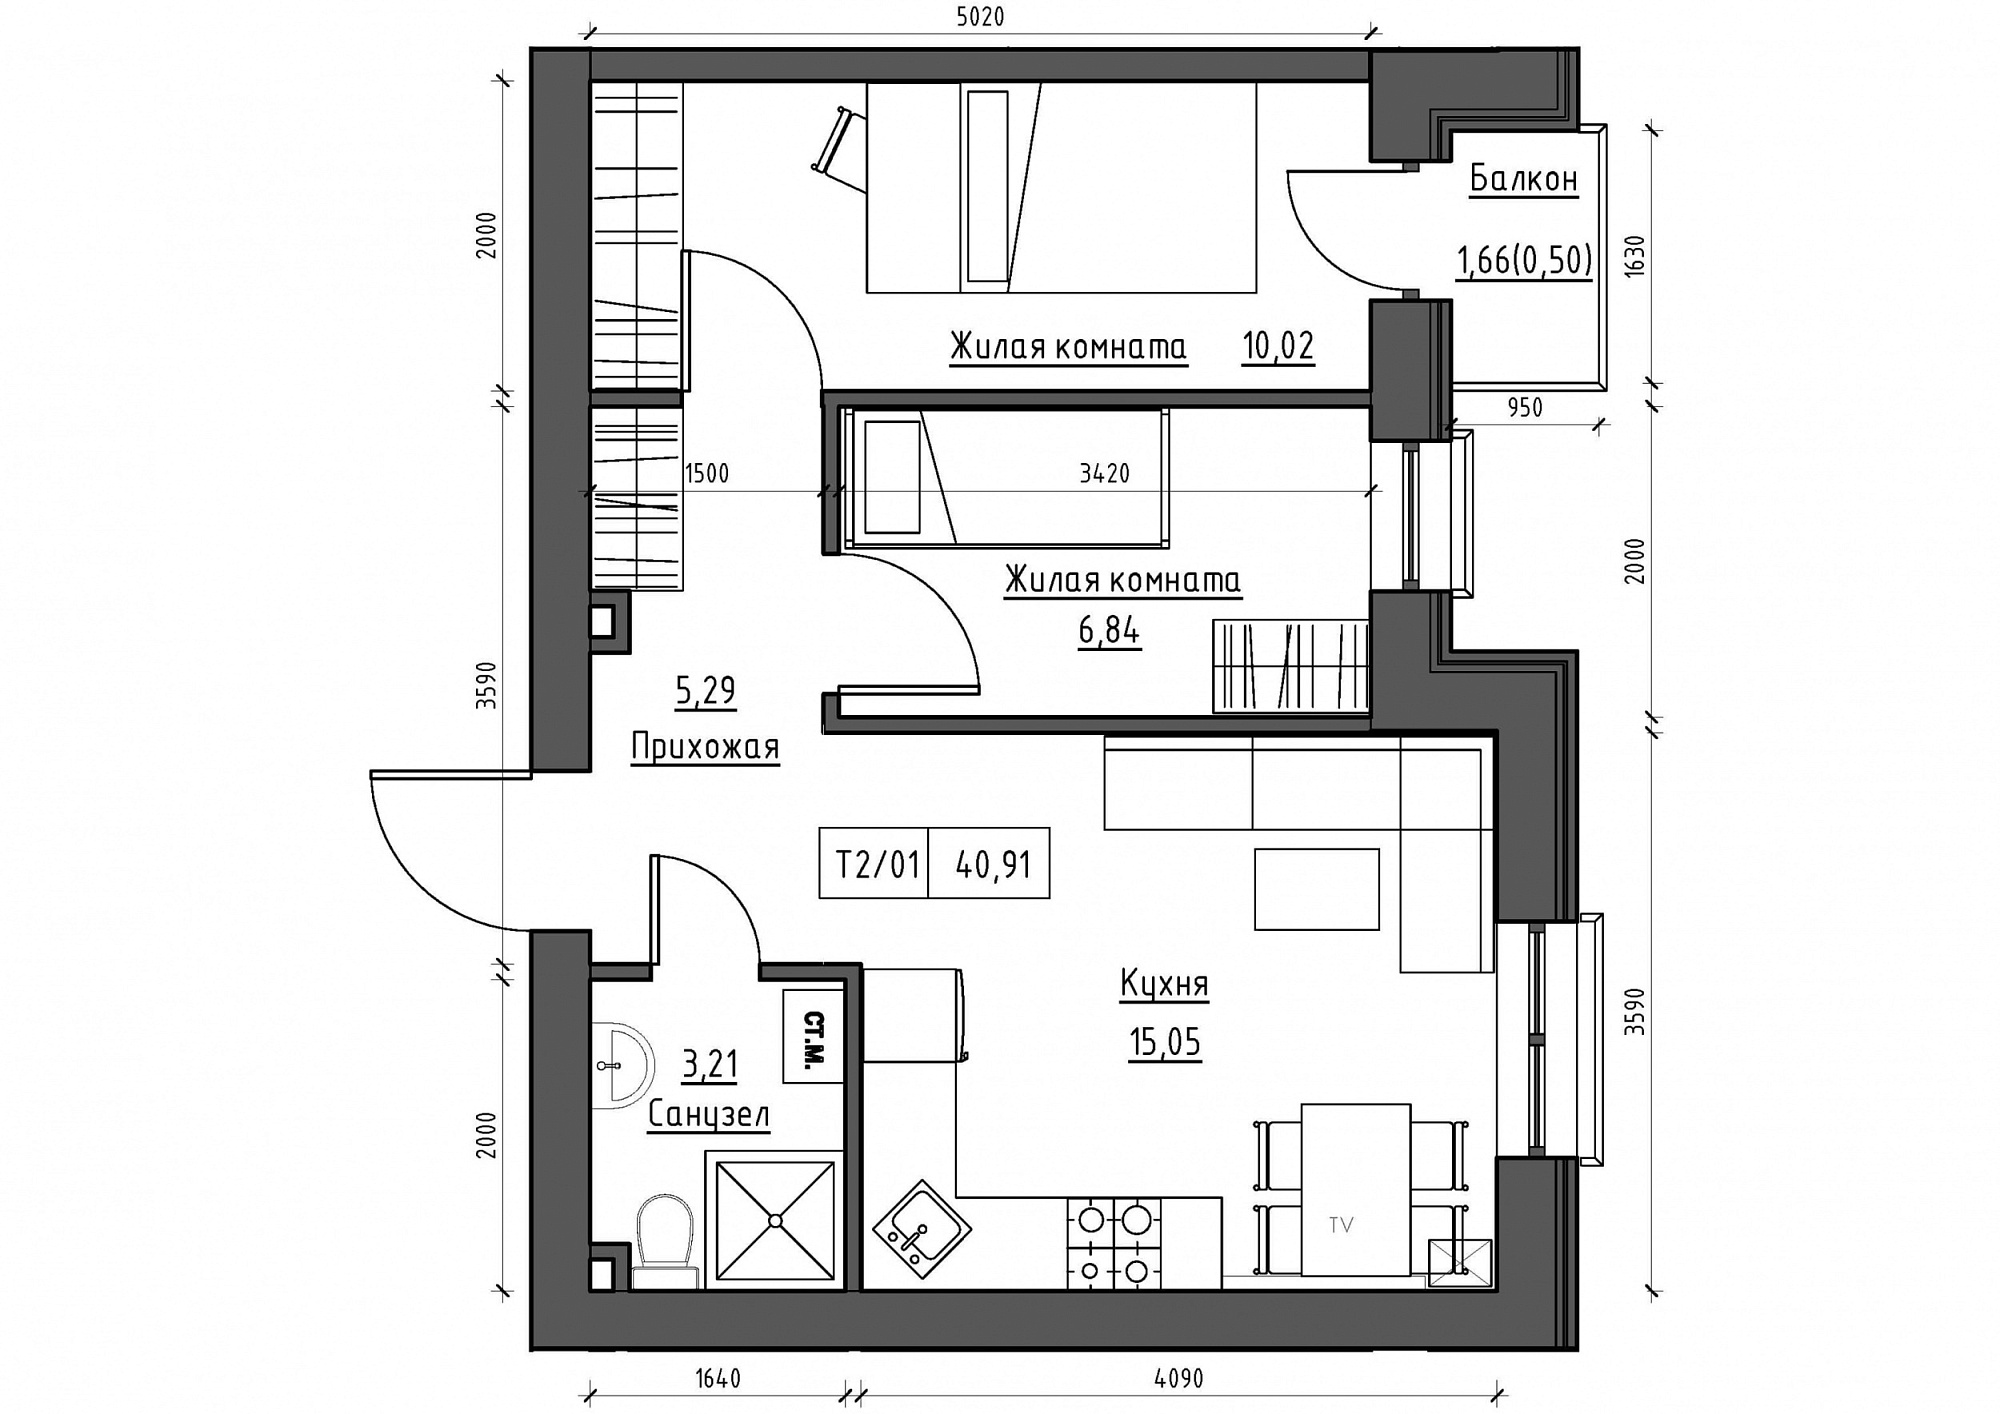 Planning 2-rm flats area 40.91m2, KS-011-02/0006.